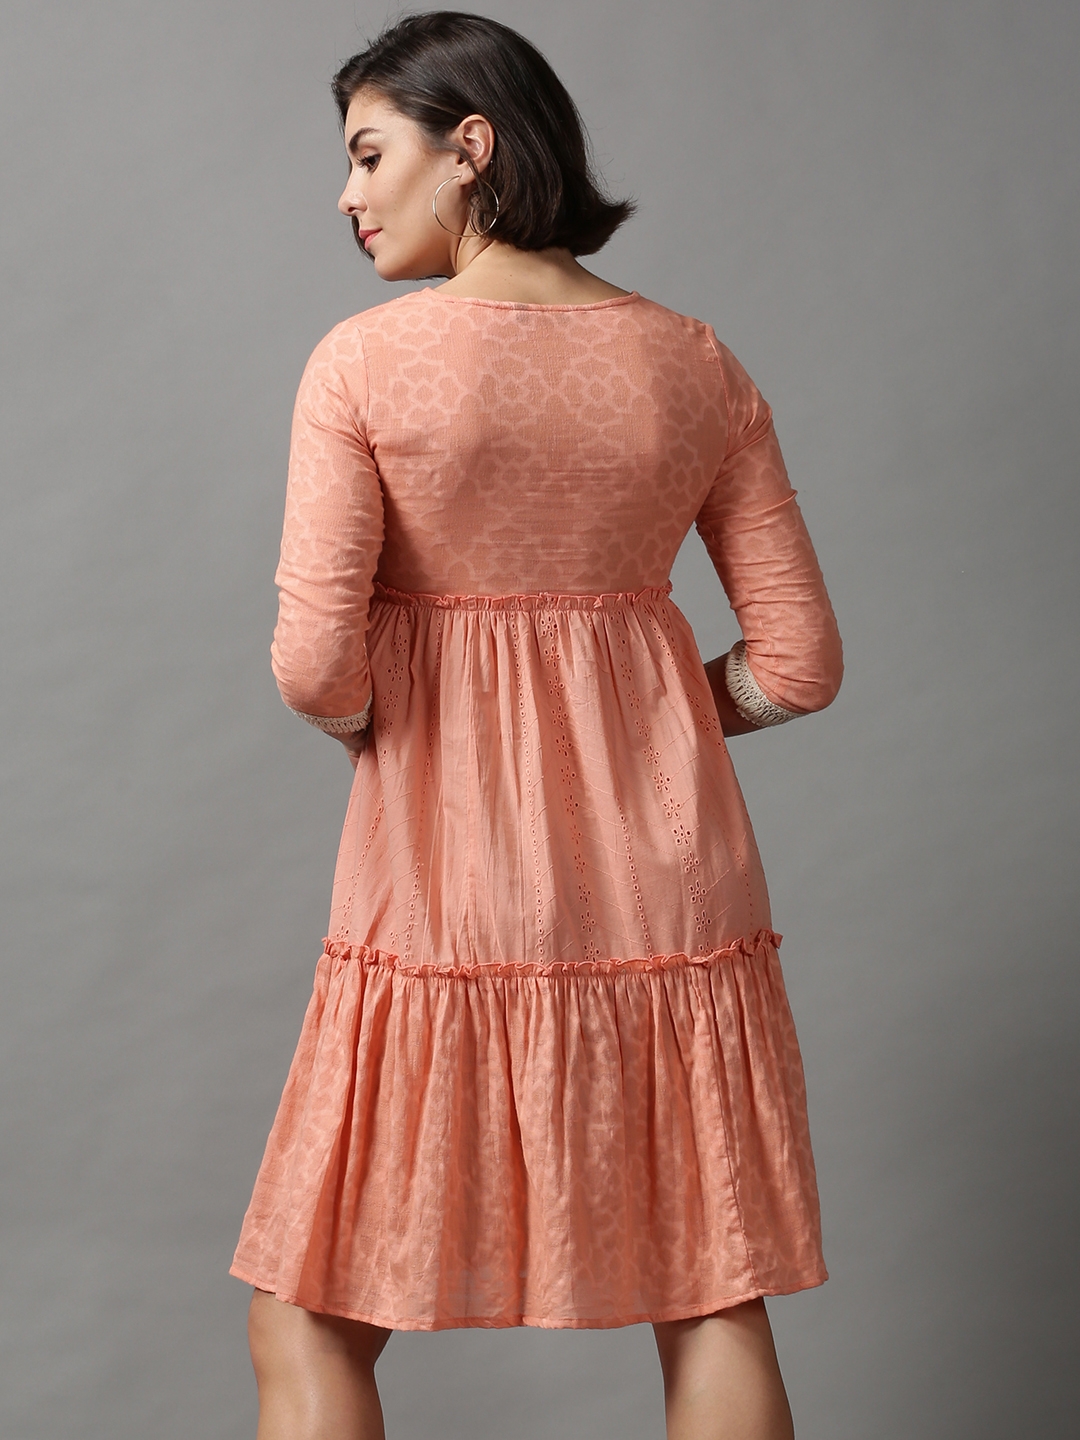 Women's Pink Cotton Solid Dresses